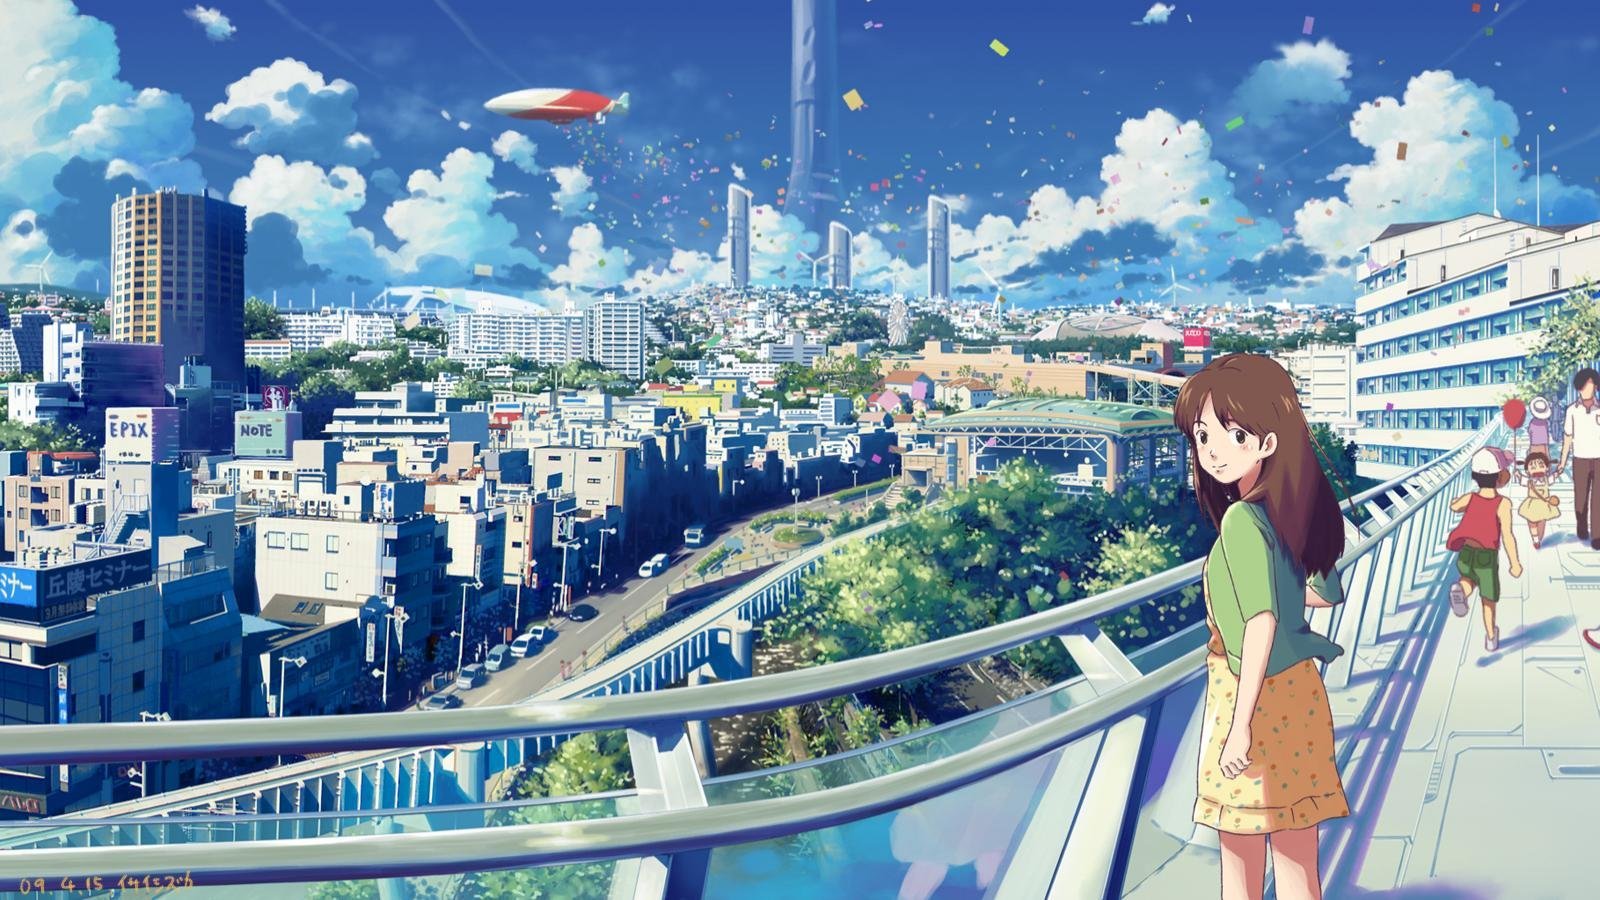 Free download Anime city wallpaper HD for desktop background [1600x900] for your Desktop, Mobile & Tablet. Explore Anime City Spring Wallpaper. Wallpaper City, City Background, City Wallpaper